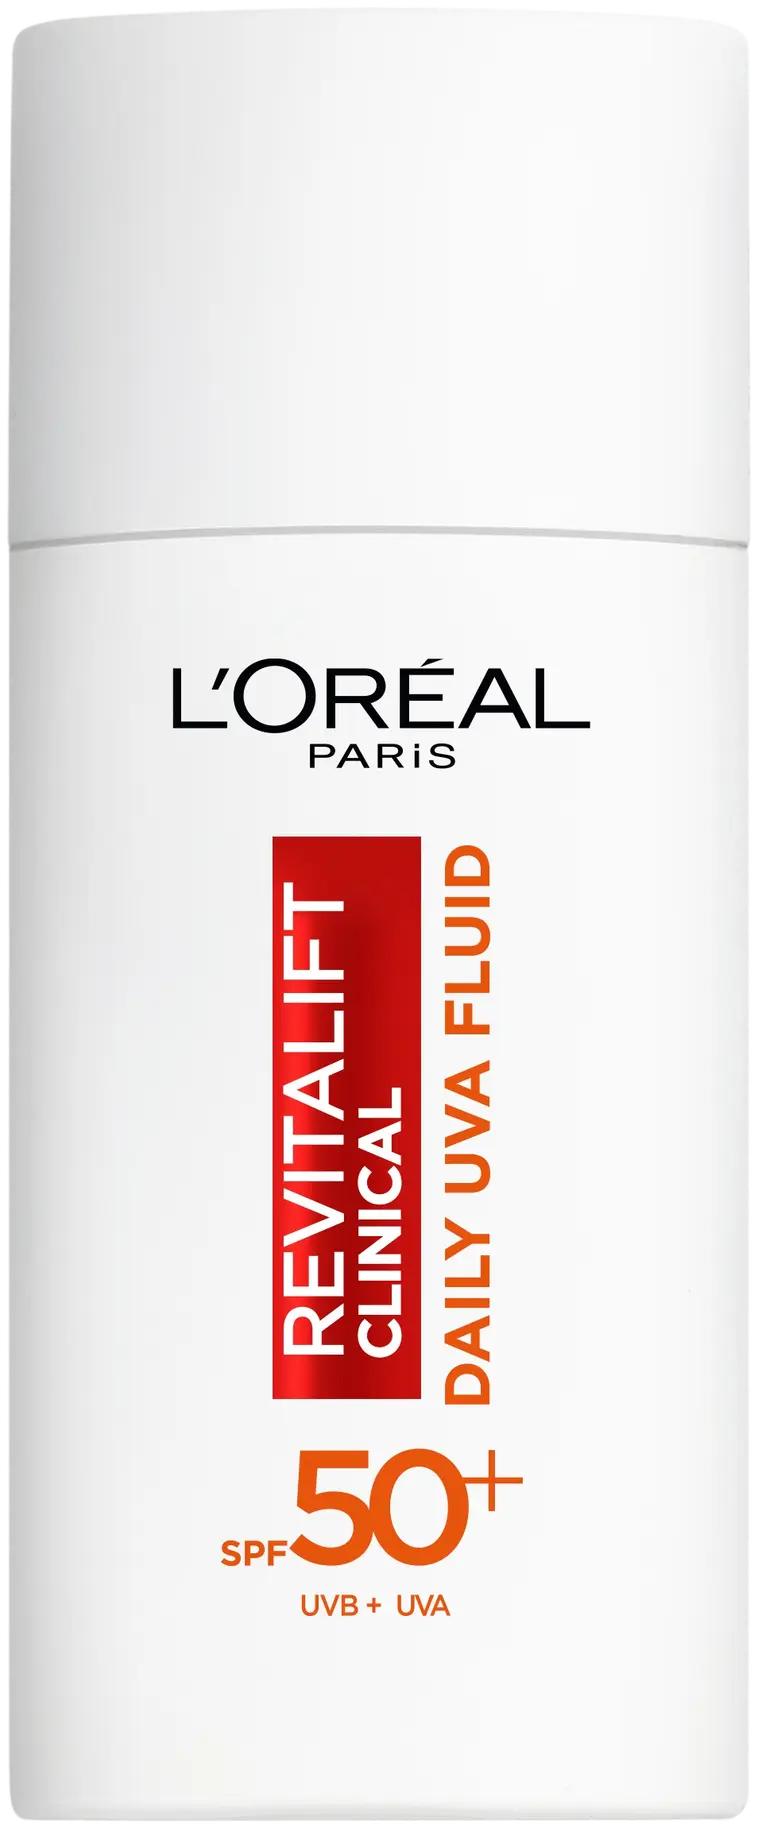 L'Oréal Paris Revitalift Clinical Daily Moisturizing Fluid SPF 50 päivävoide normaalille iholle  50ml